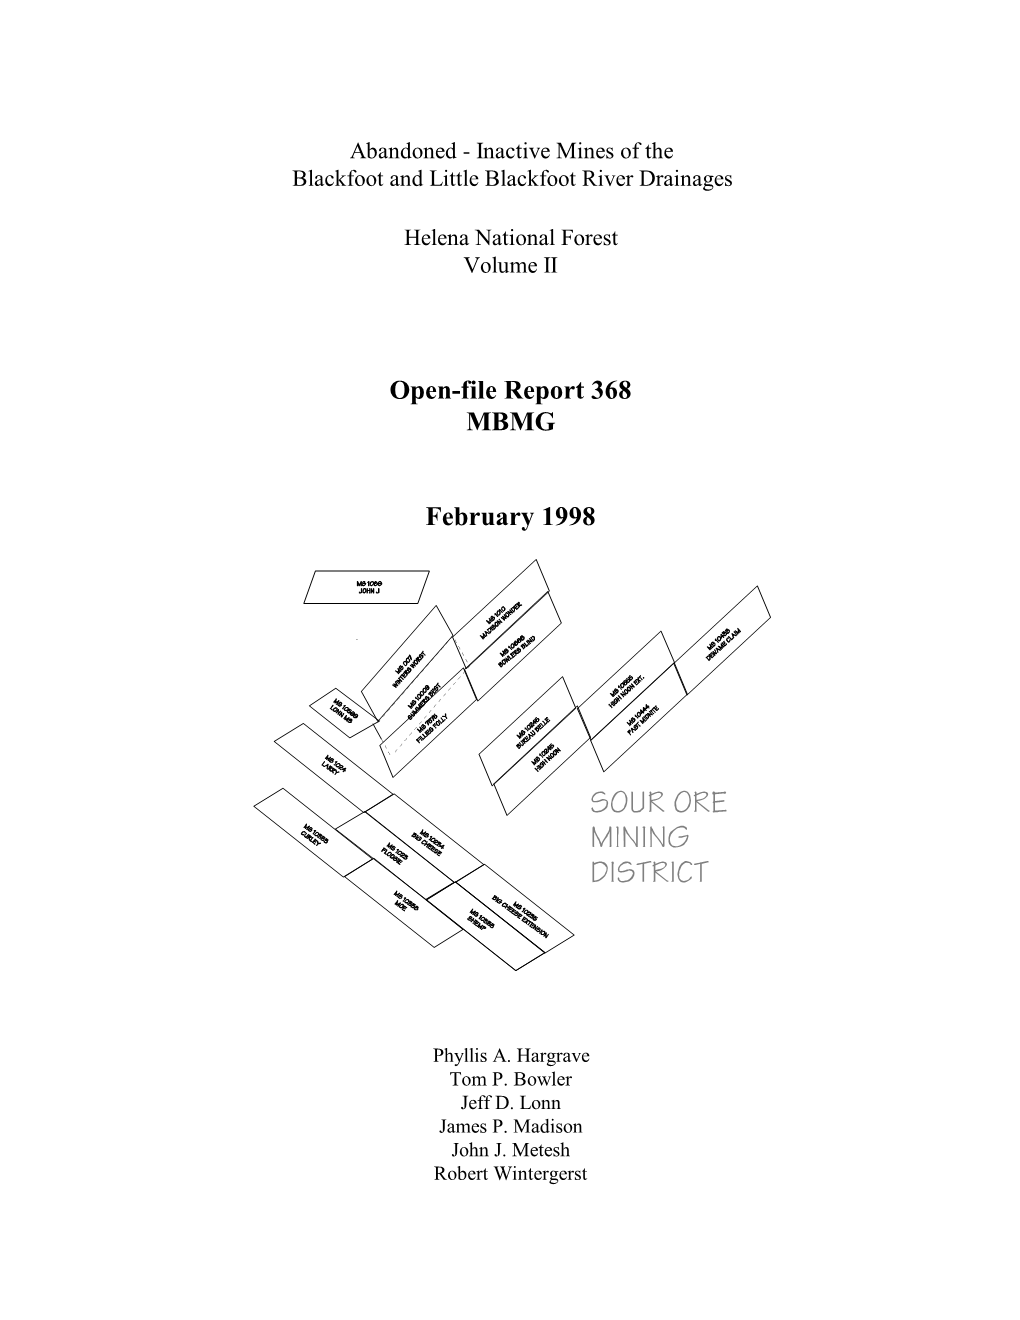 Open-File Report 368 MBMG February 1998